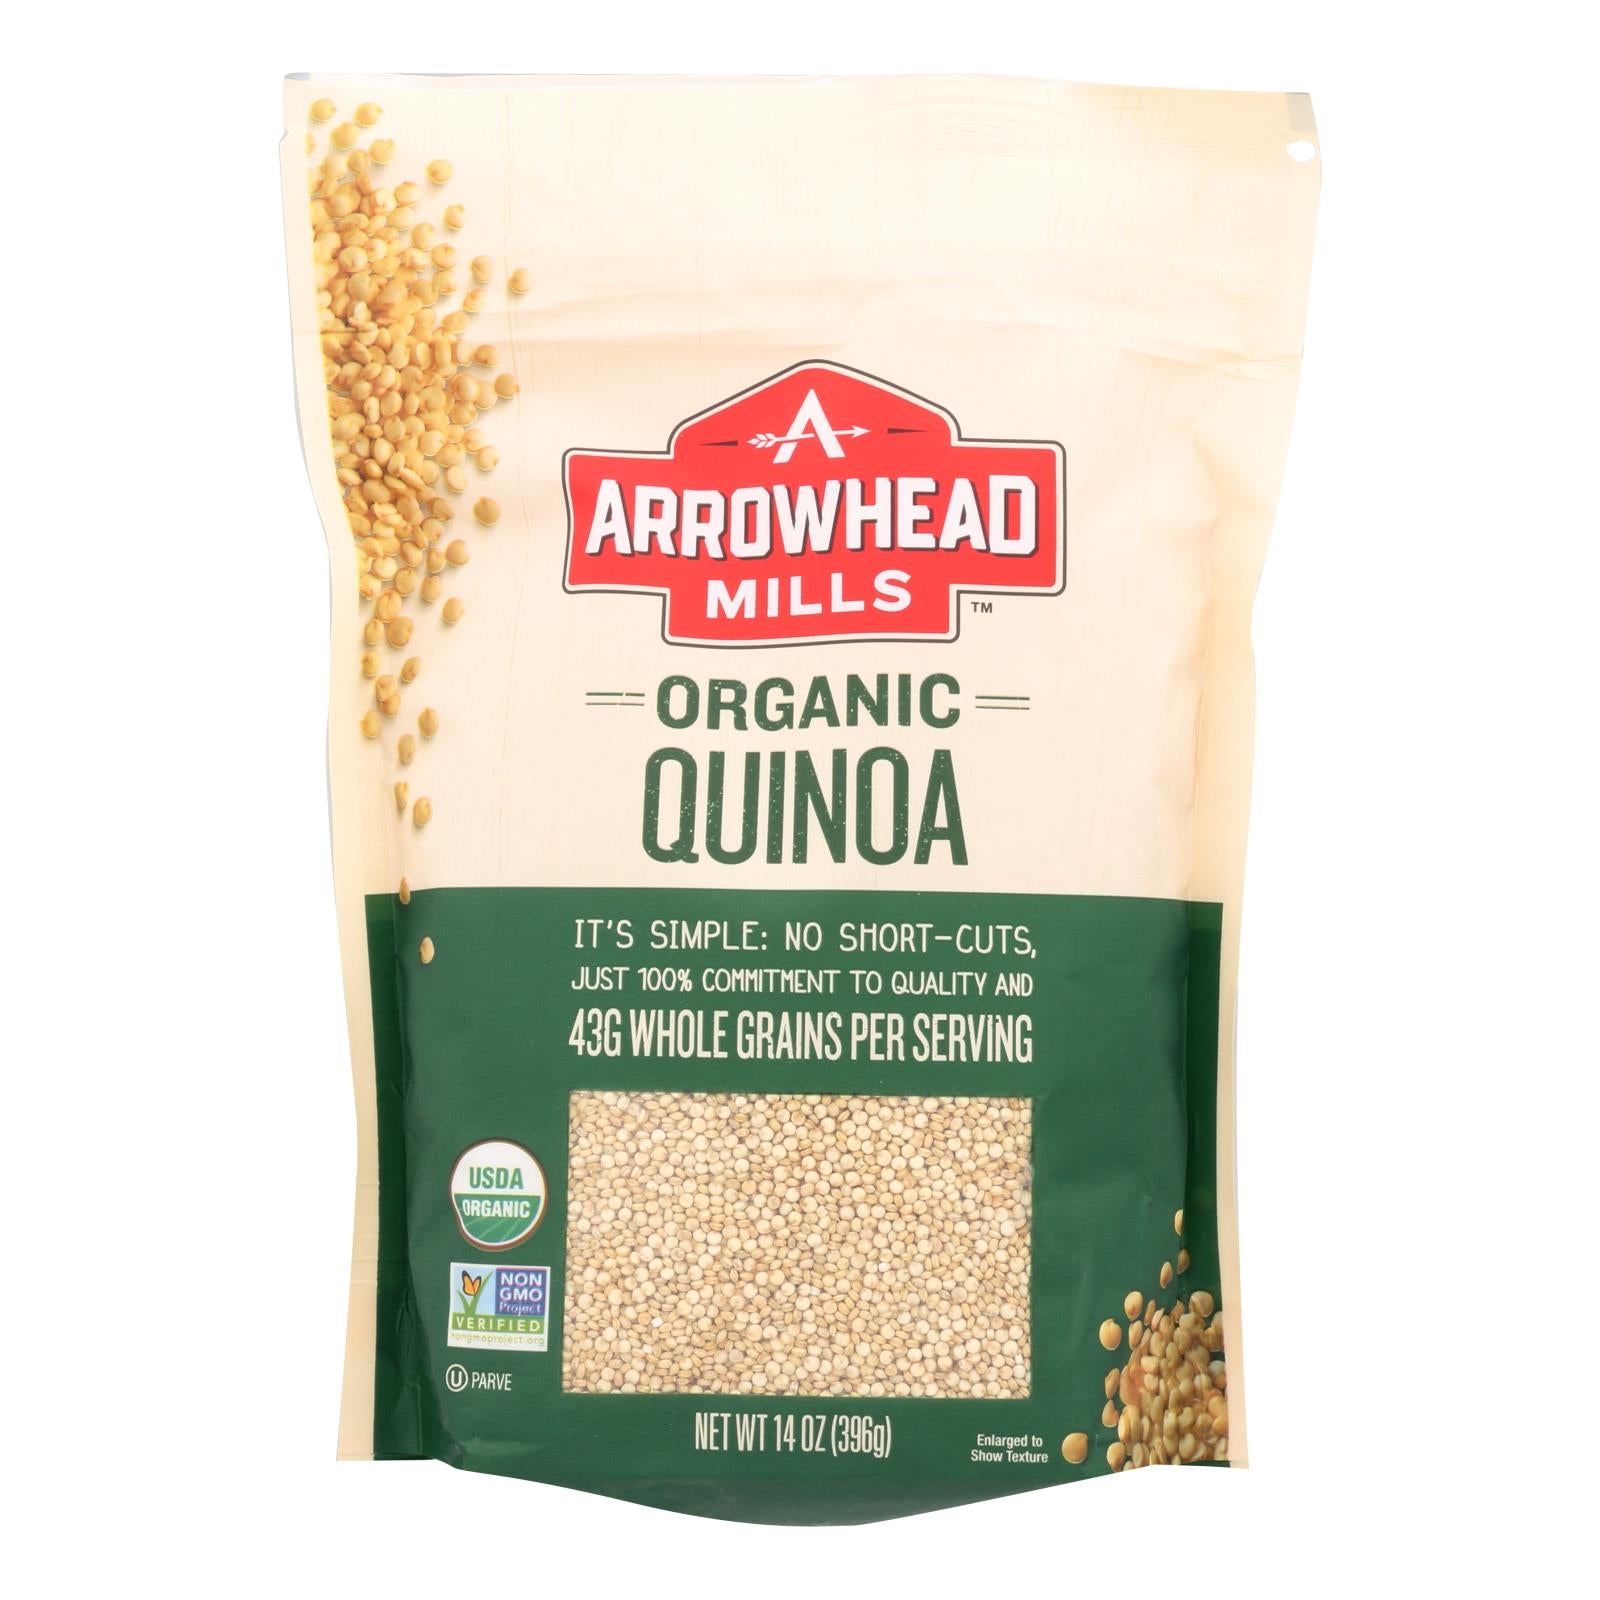 Arrowhead Mills, Arrowhead Mills - Organic Quinoa - Case of 6 - 14 oz. (Pack of 6)